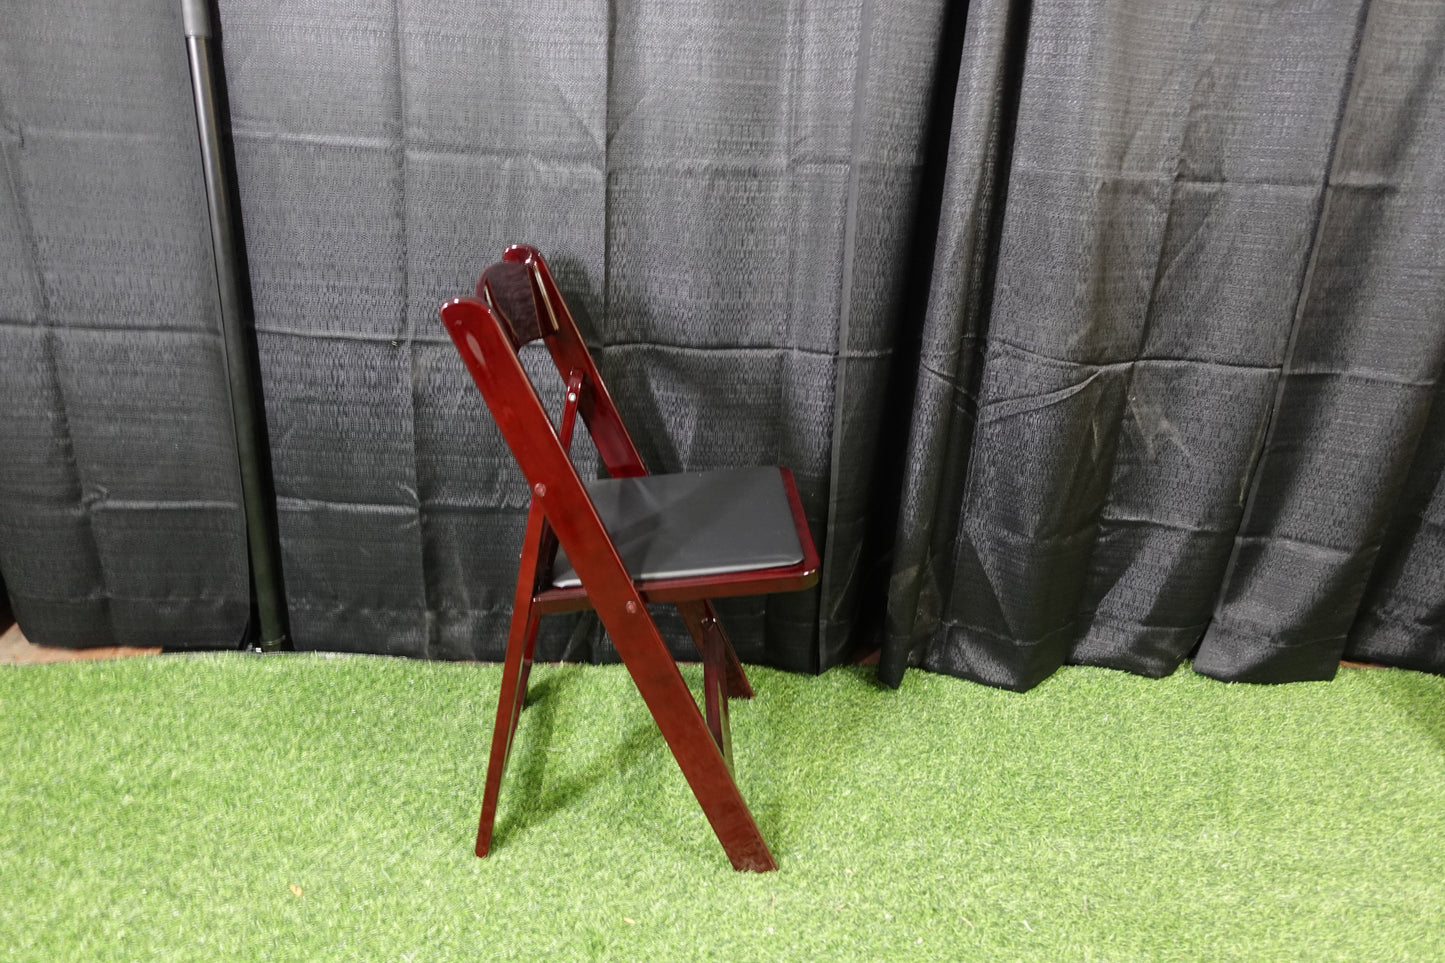 Mahogany Resin Folding Chair - Set of 4